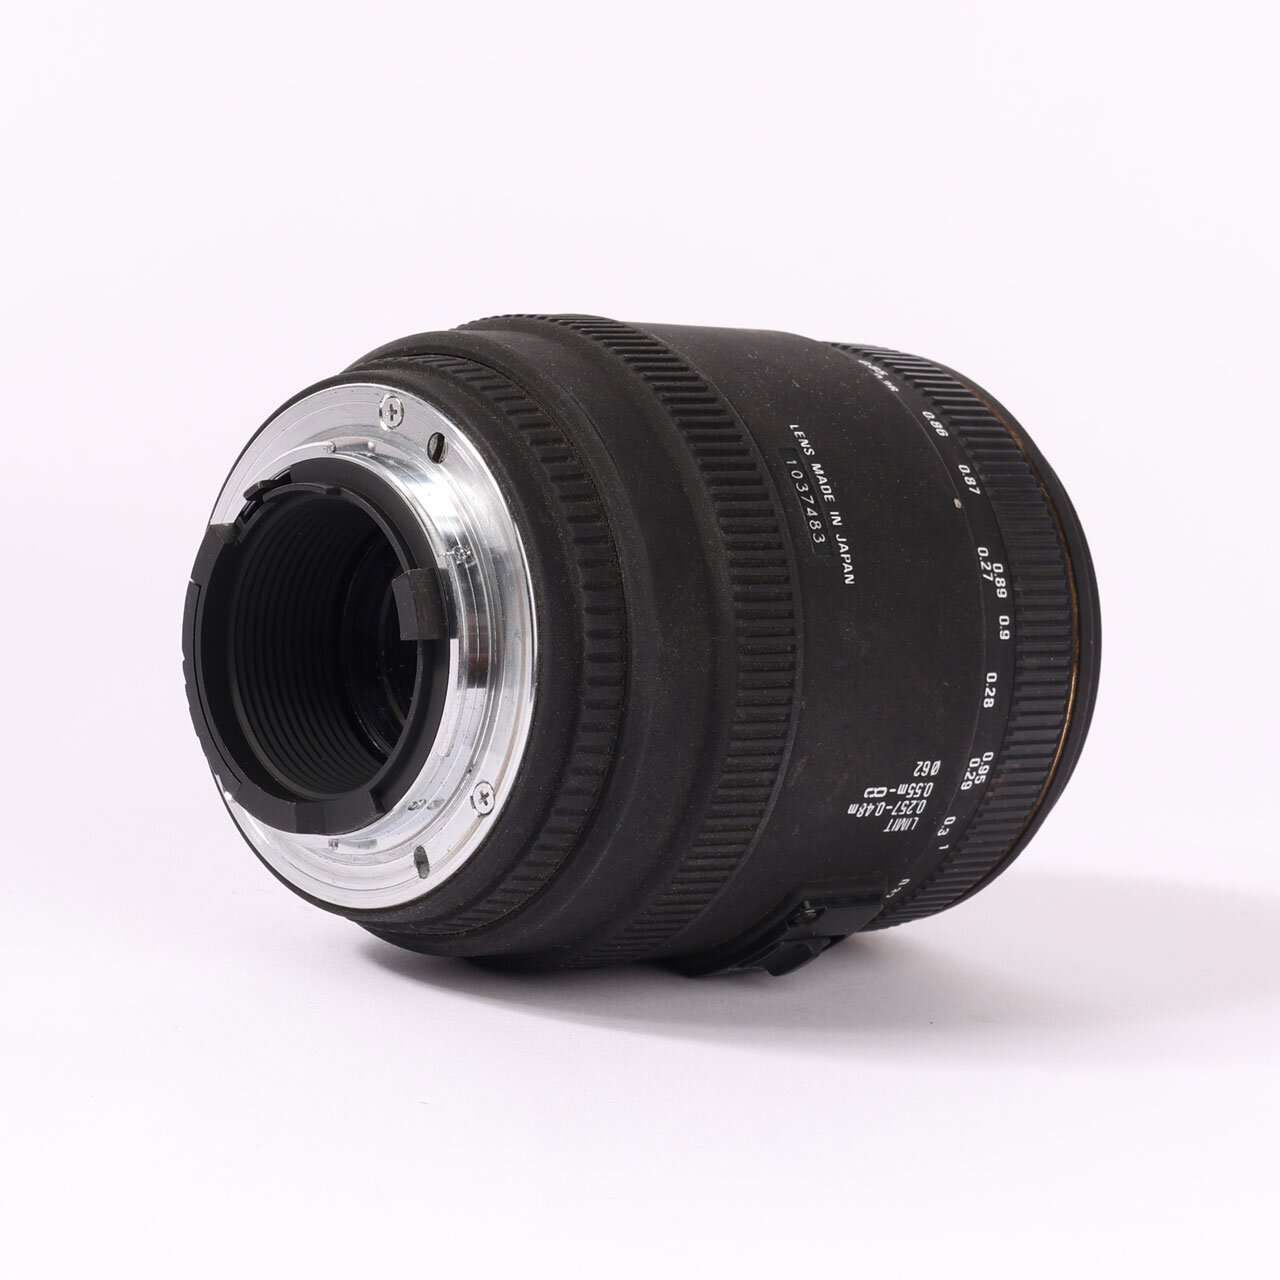 Sigma 2.8/70mm DG Macro Nikon AF